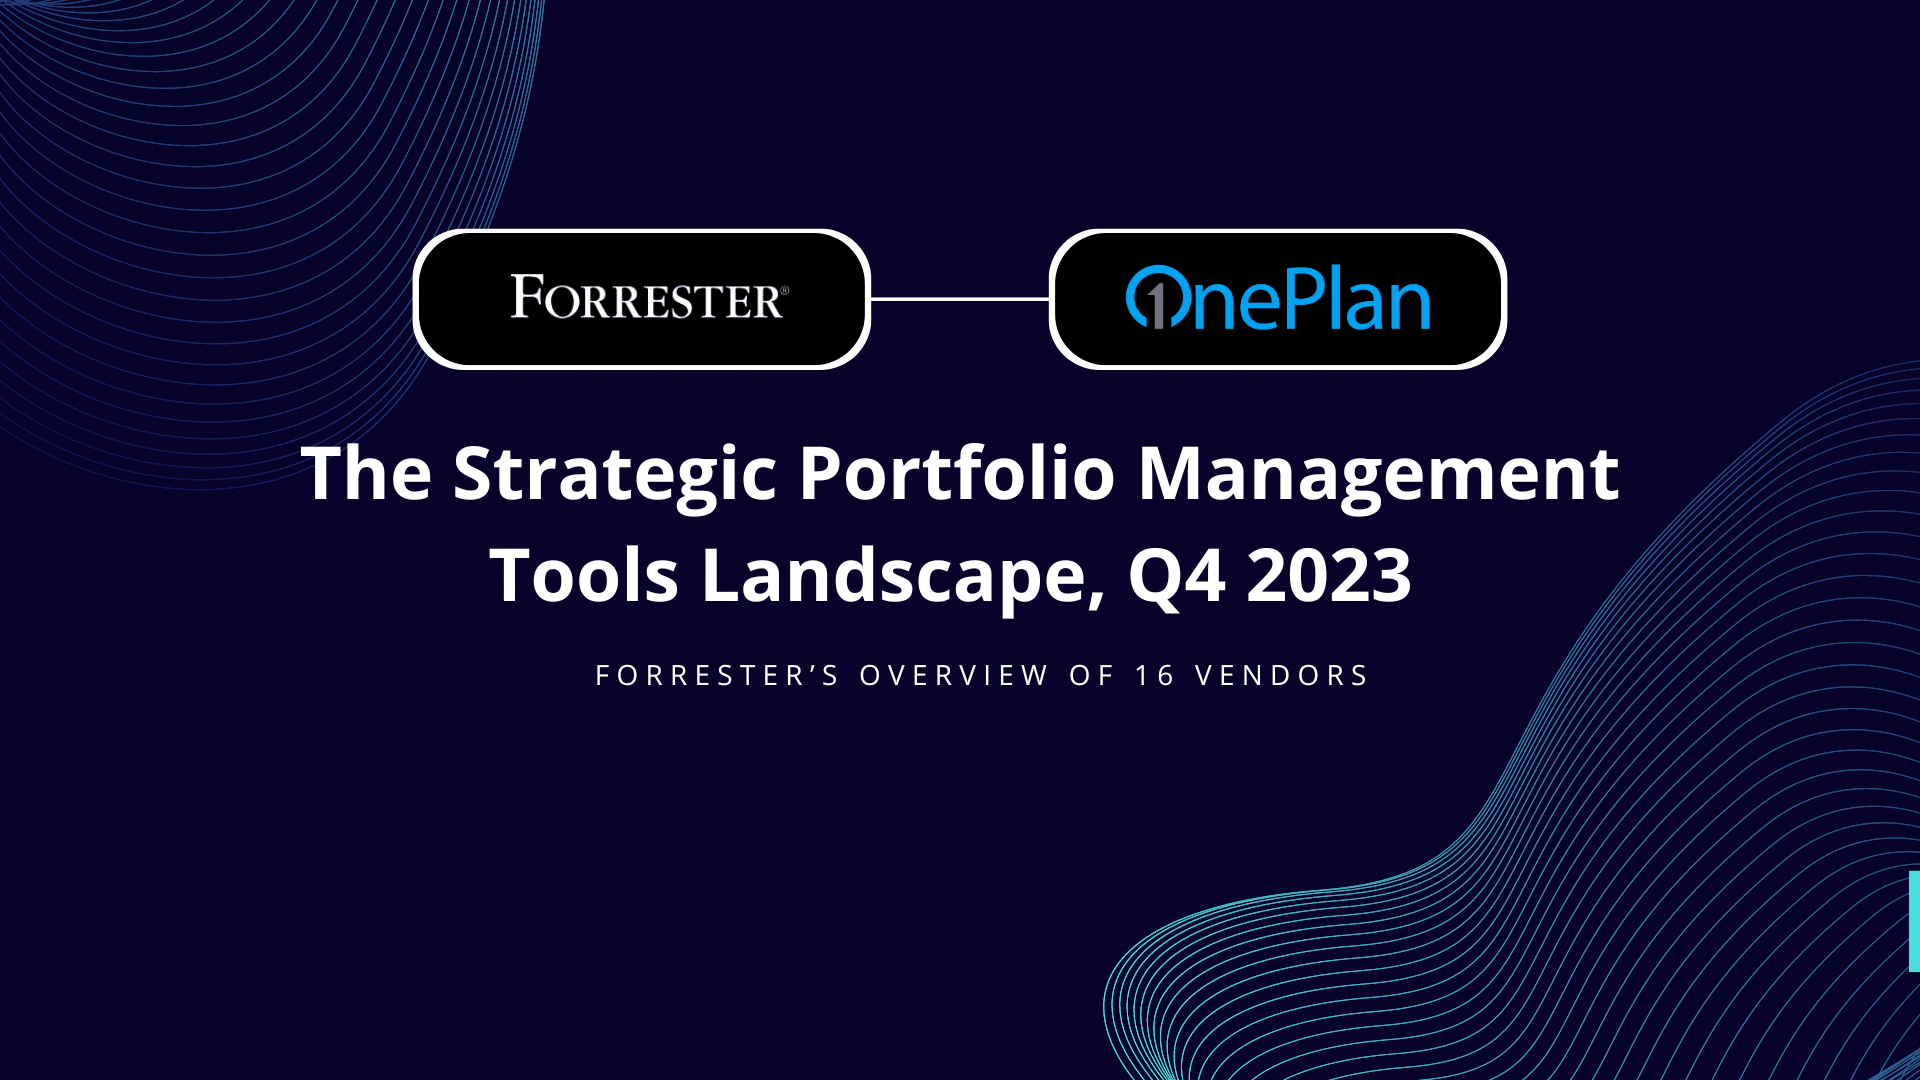 OnePlan Featured in Forrester Wave for Strategic Portfolio Management